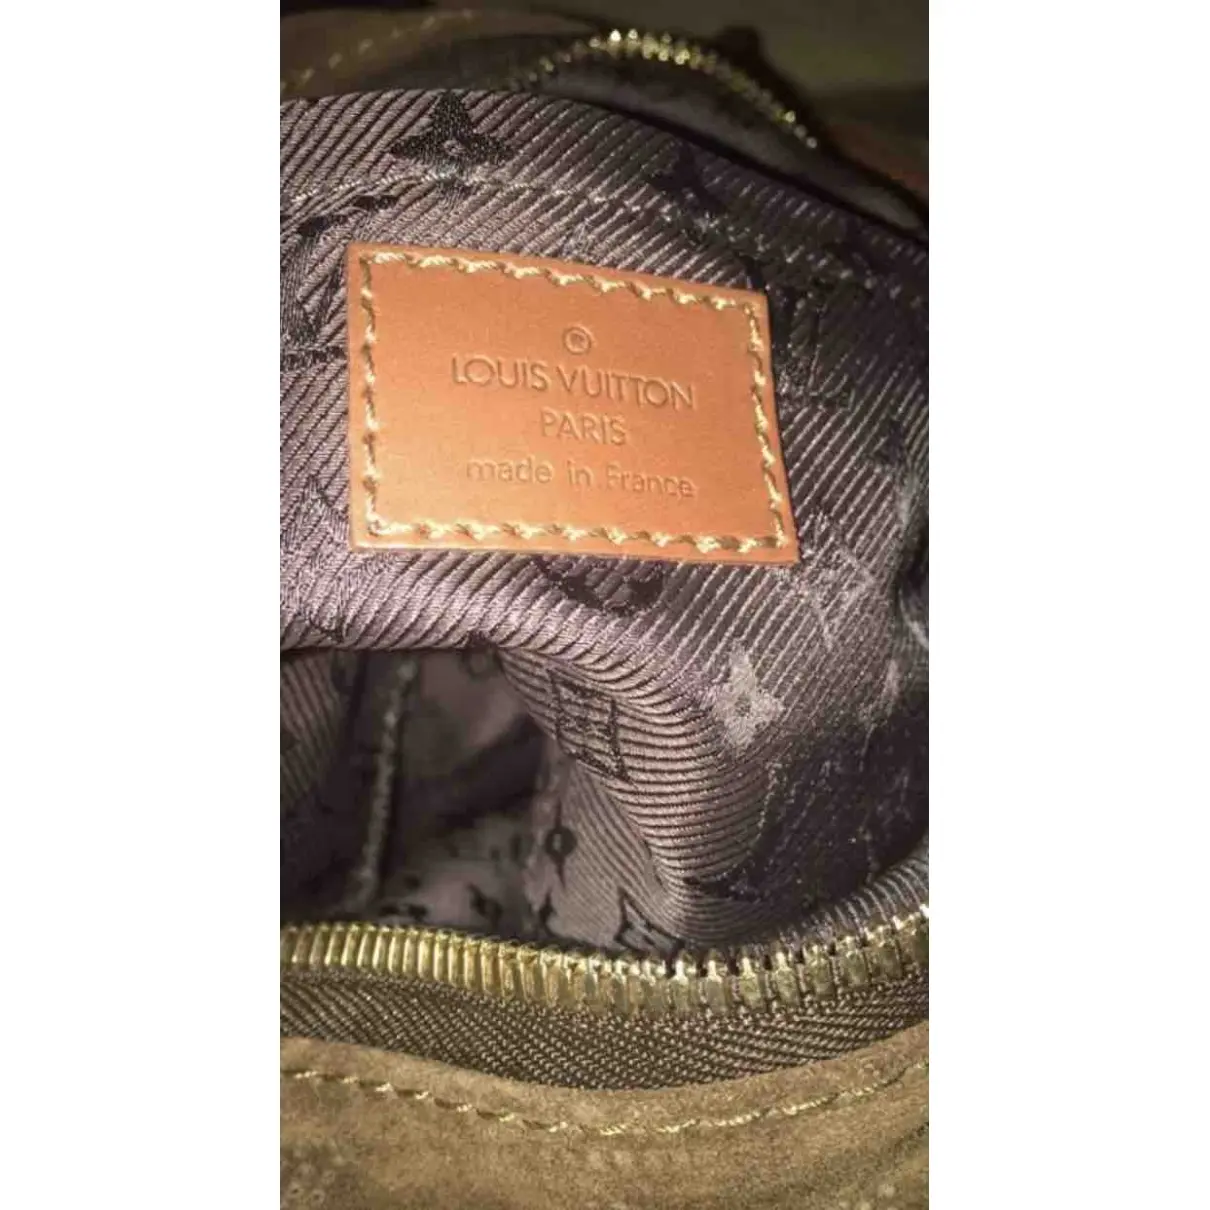 Buy Louis Vuitton Onatah handbag online